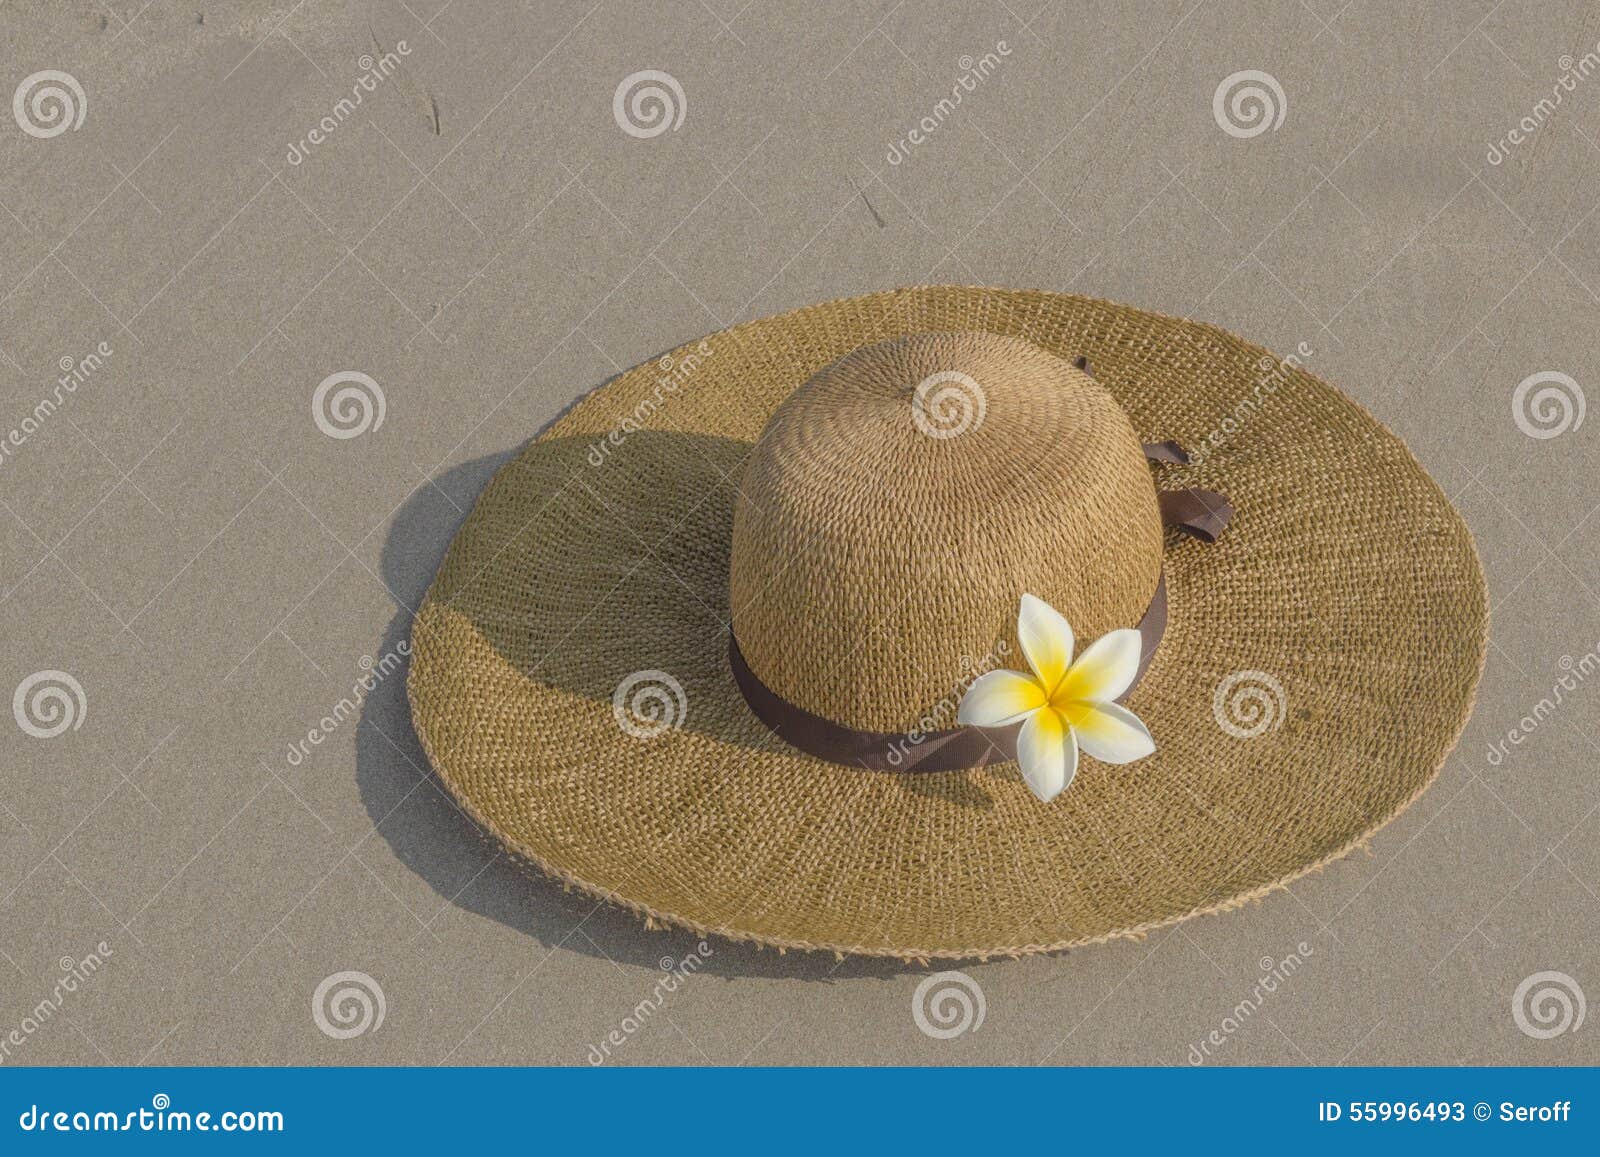 Straw hat and plumeria stock image. Image of beachfront - 55996493